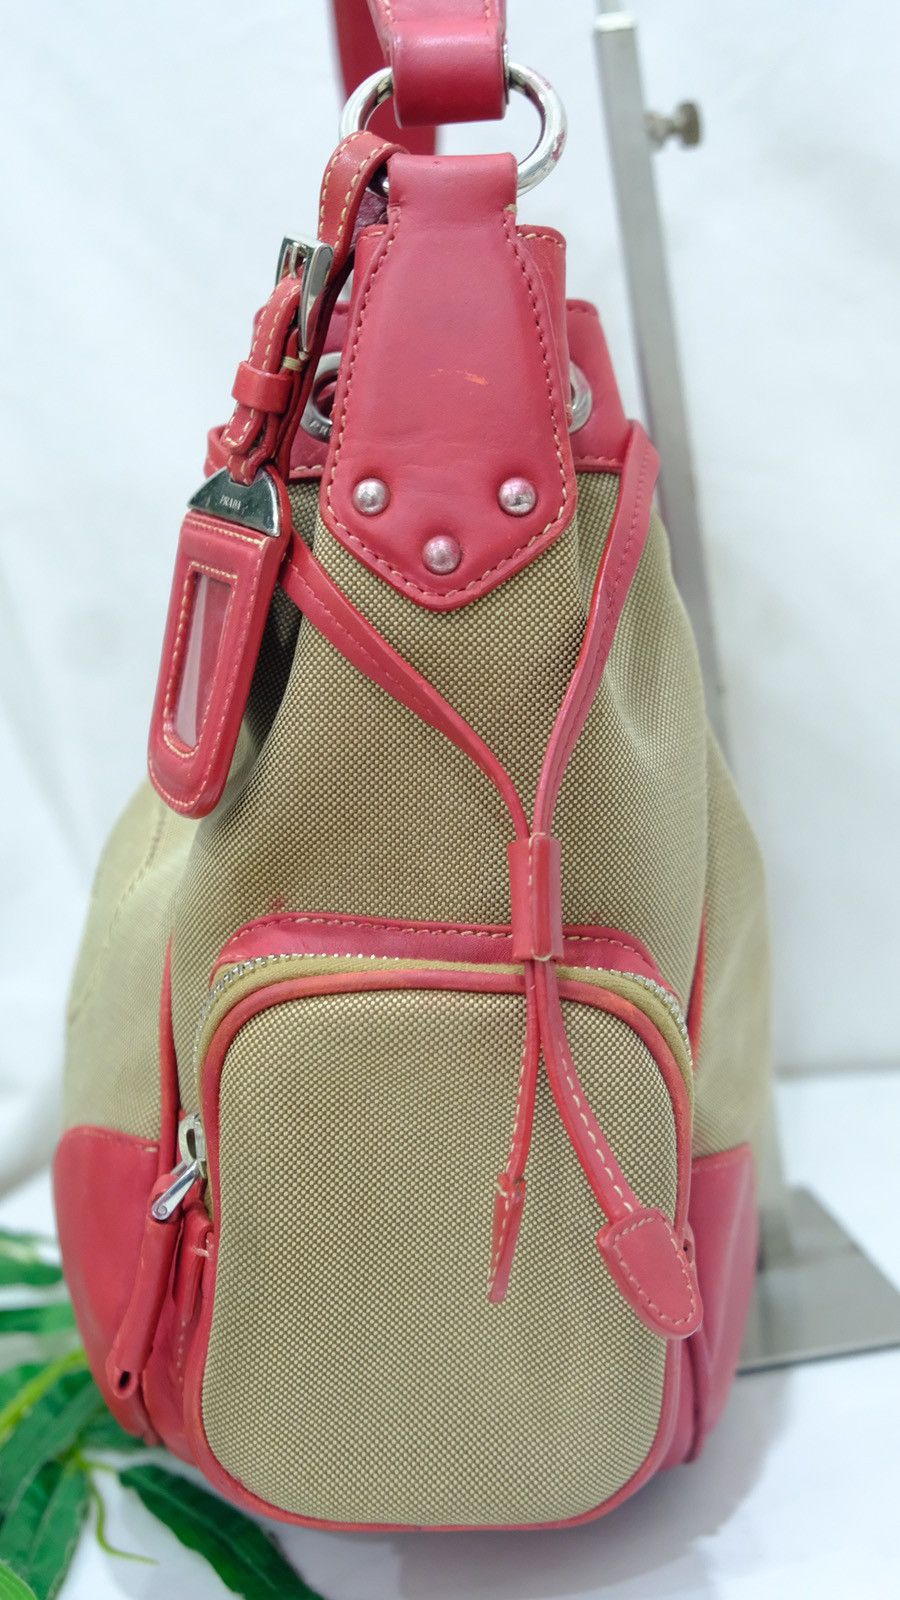 Authentic Prada Jacquard canvas red leather handbag - 5